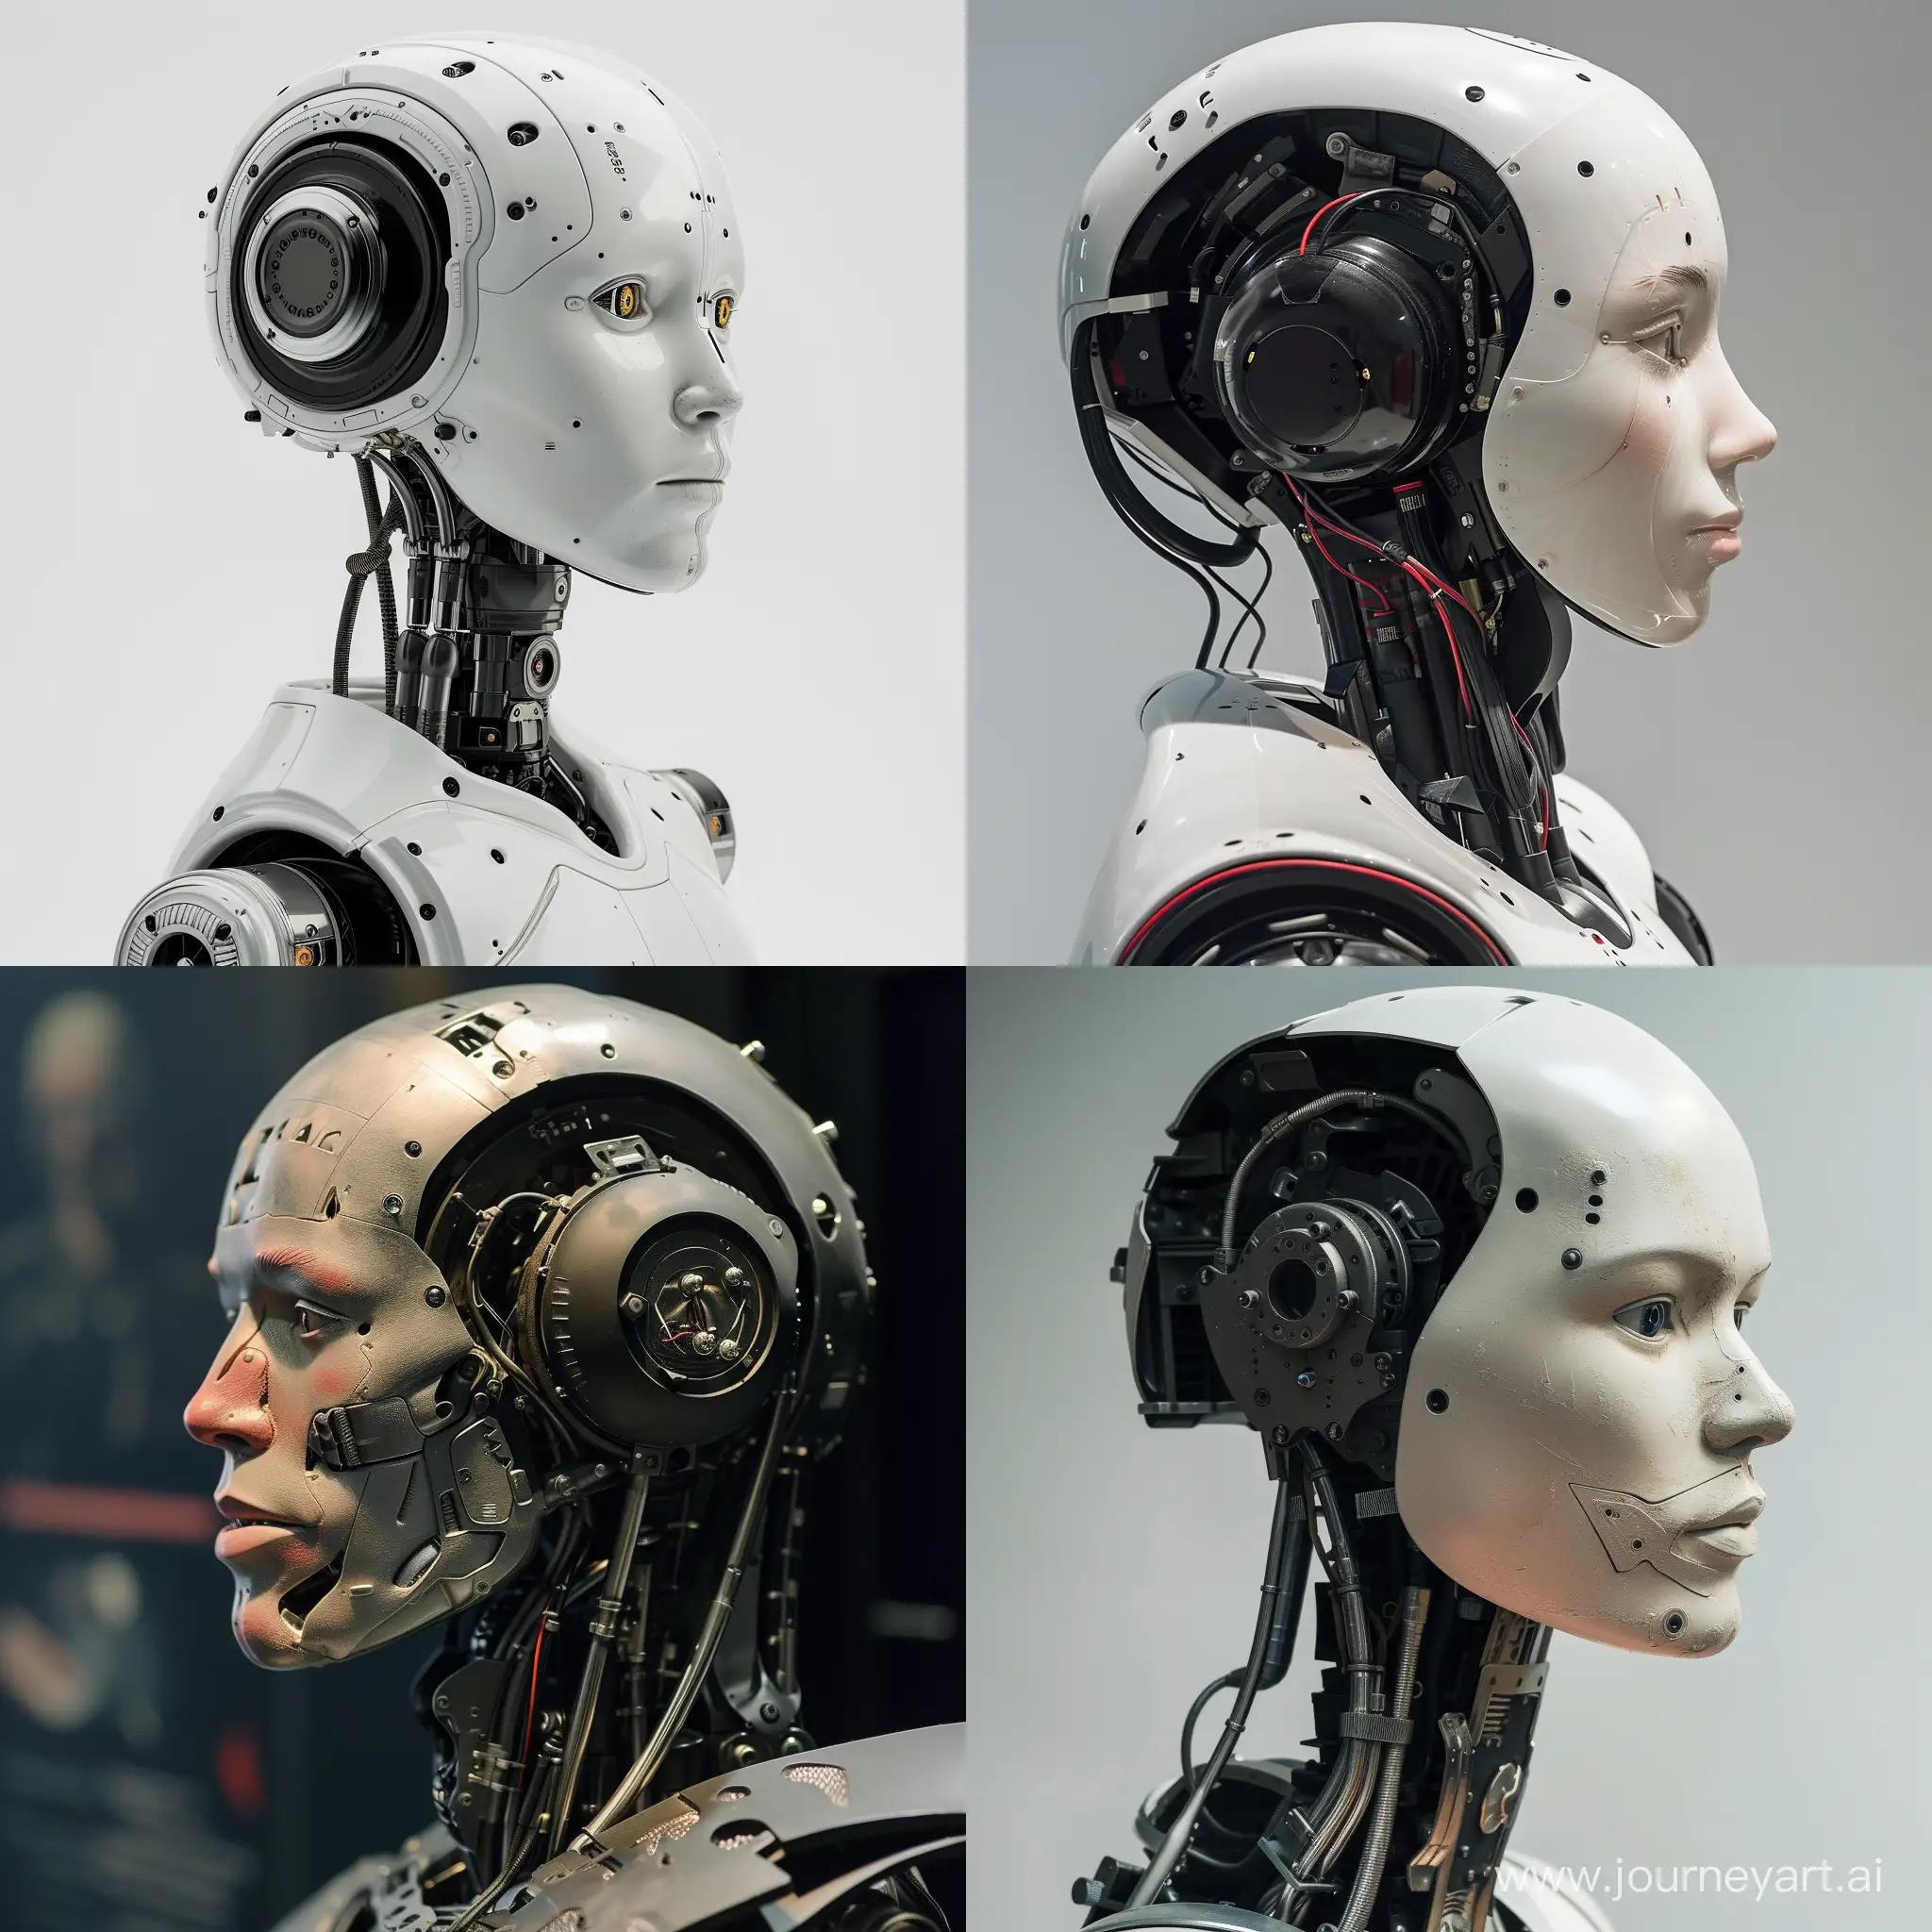 Futuristic-Humanoid-Robot-Head-in-Industrial-Setting